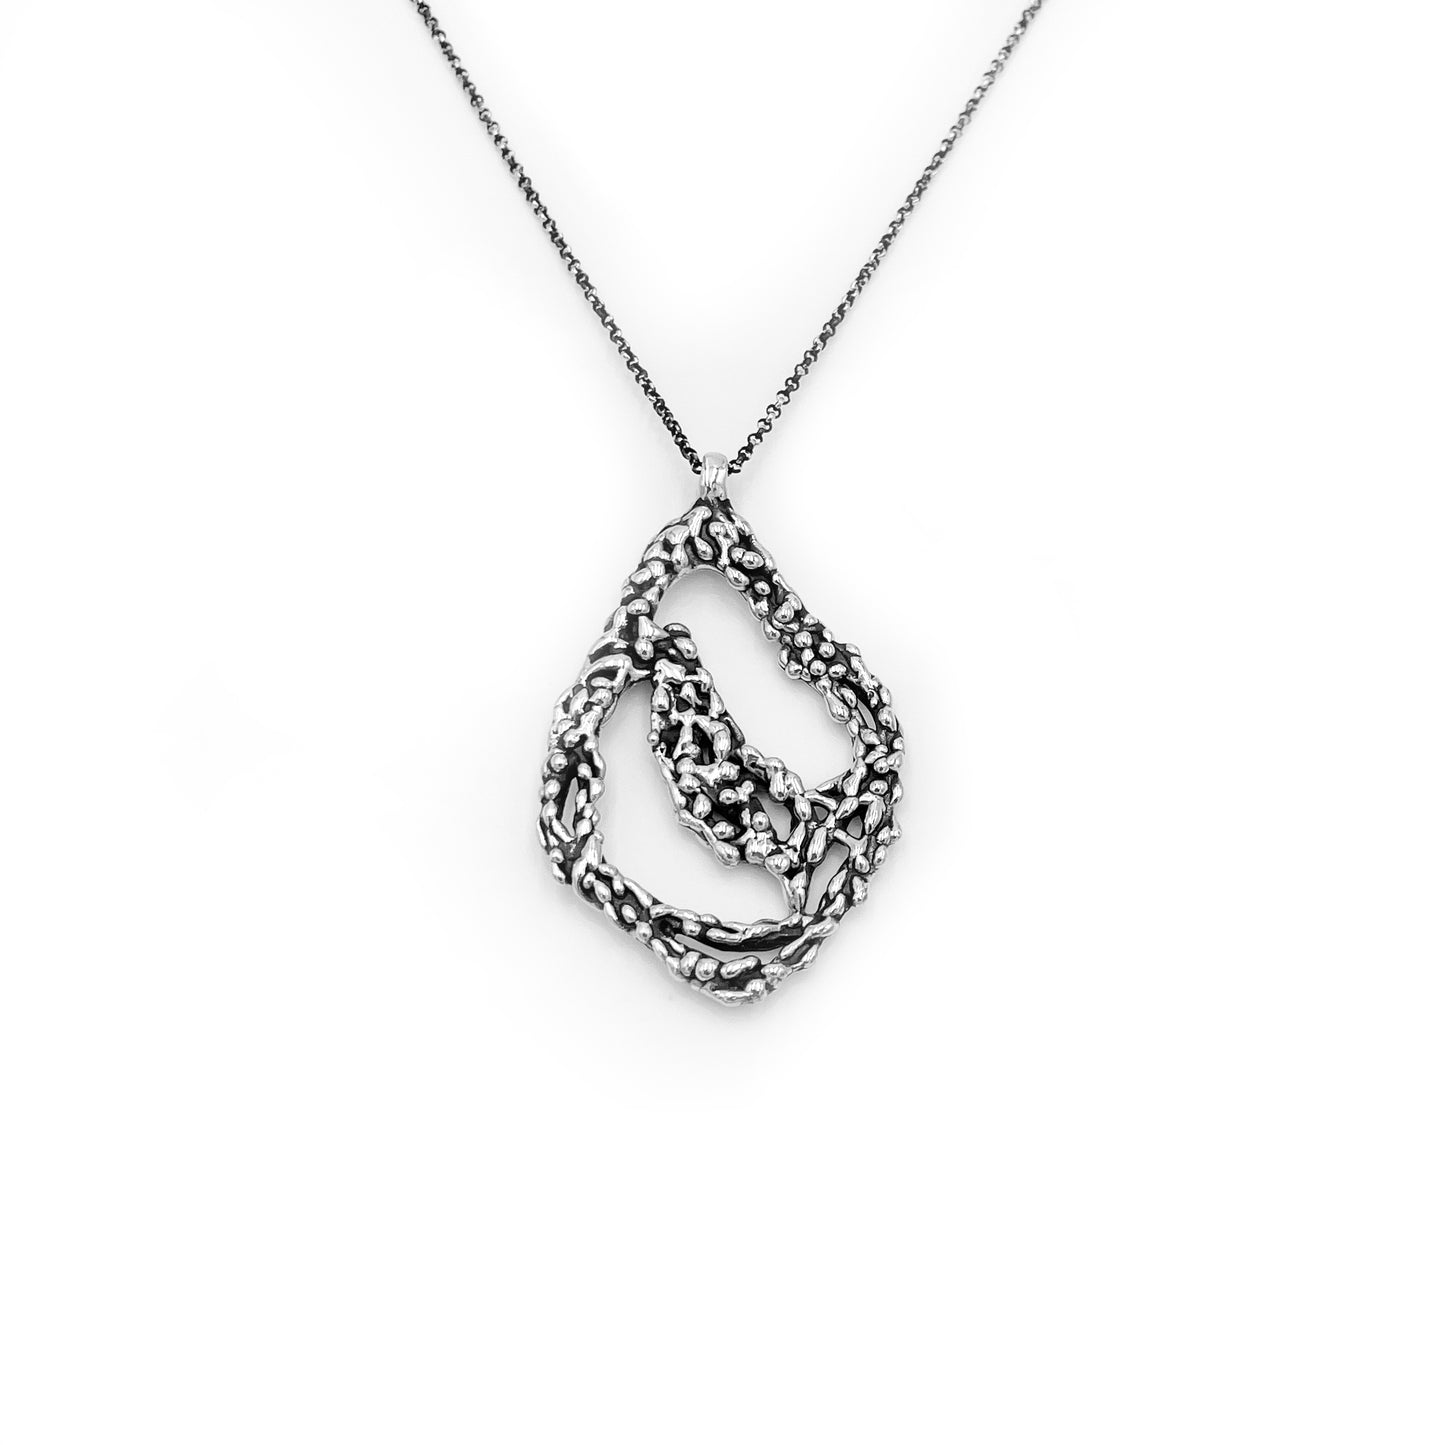 Zodiac Necklace - Zodiac Sign - Sterling Silver Jewelry - Special Necklace - Statement Necklace - Spiritual Necklace - Gemini Necklace